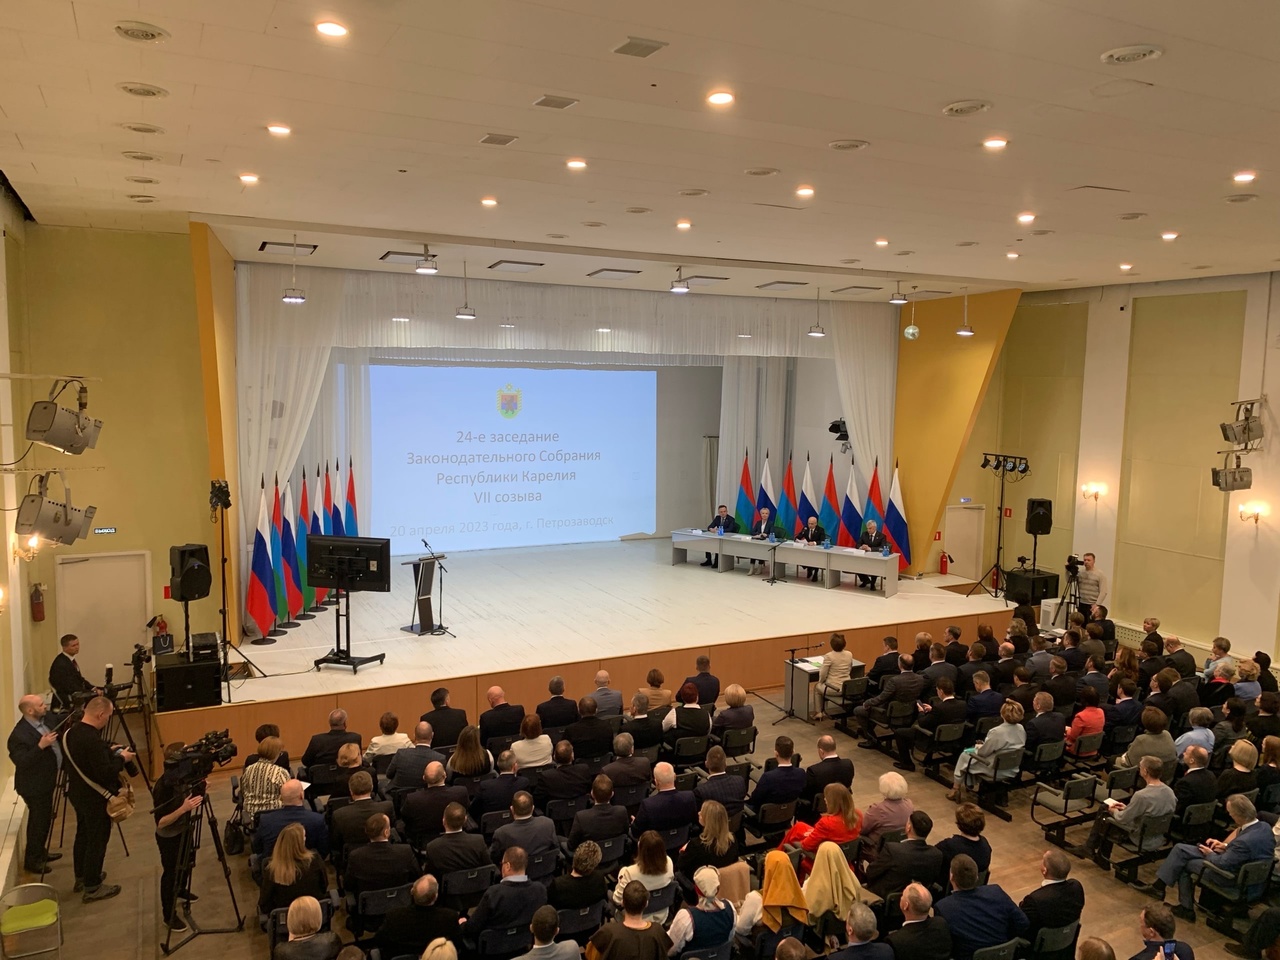 Шандалович открыл заседание парламента, на котором Глава Карелии представит отчет о работе Правительства